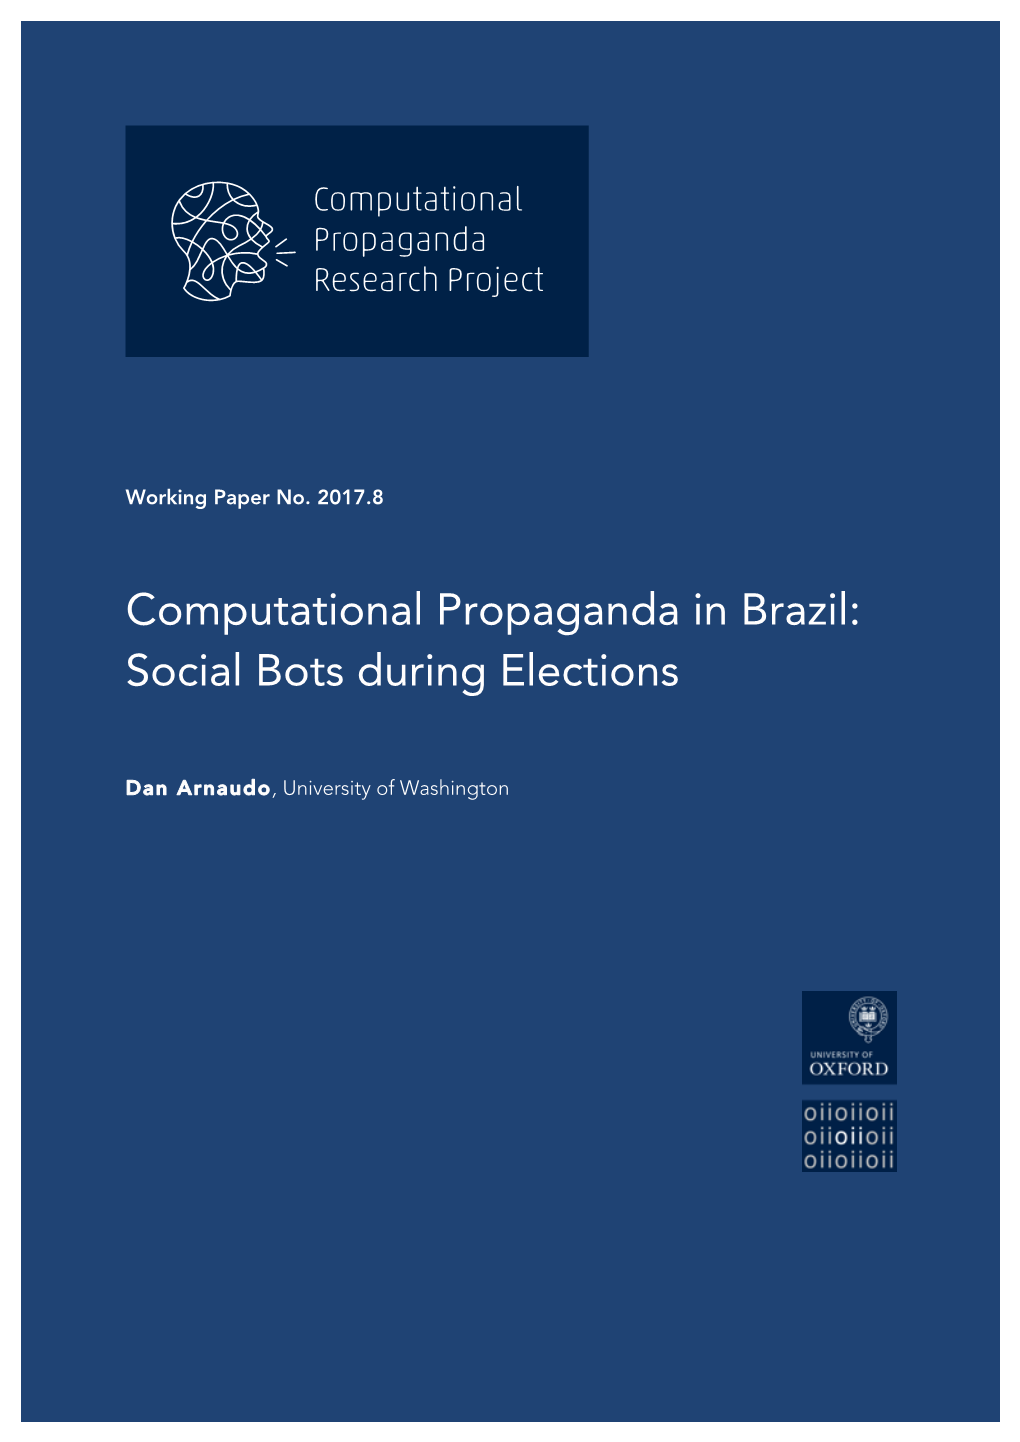 Computational Propaganda in Brazil: Social Bots During Elections